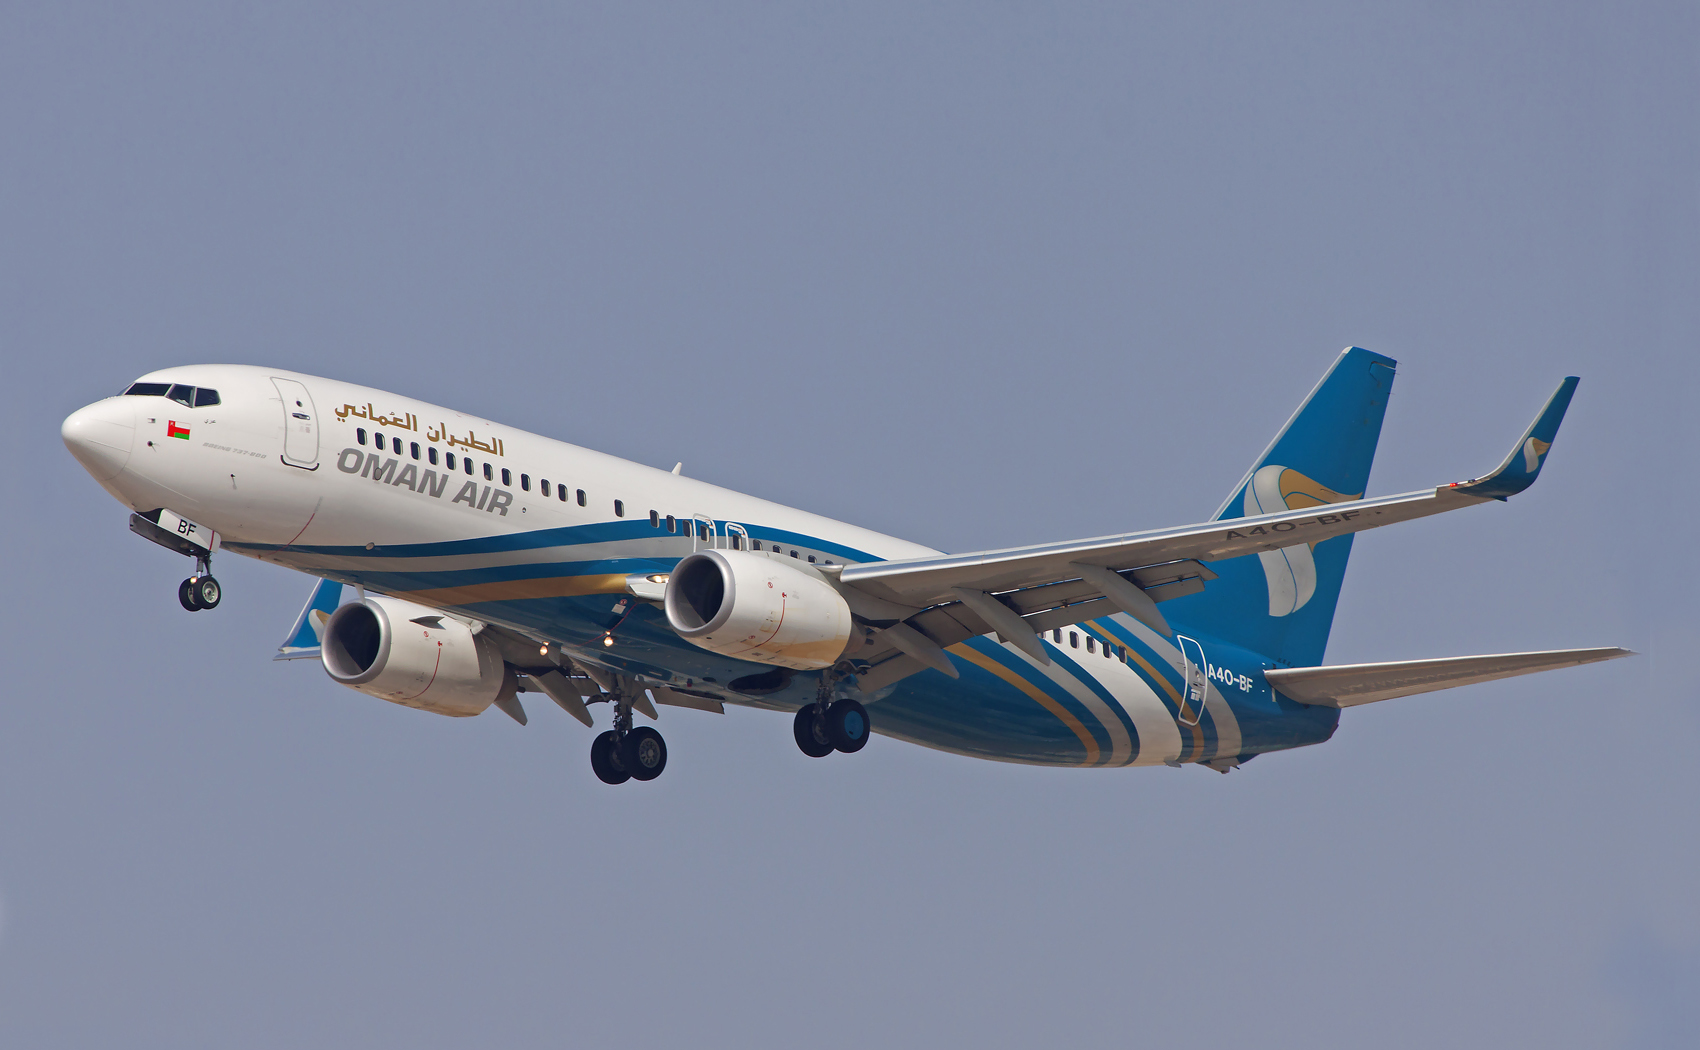 Sohar flight cancellation to hit Oman tourism, investment